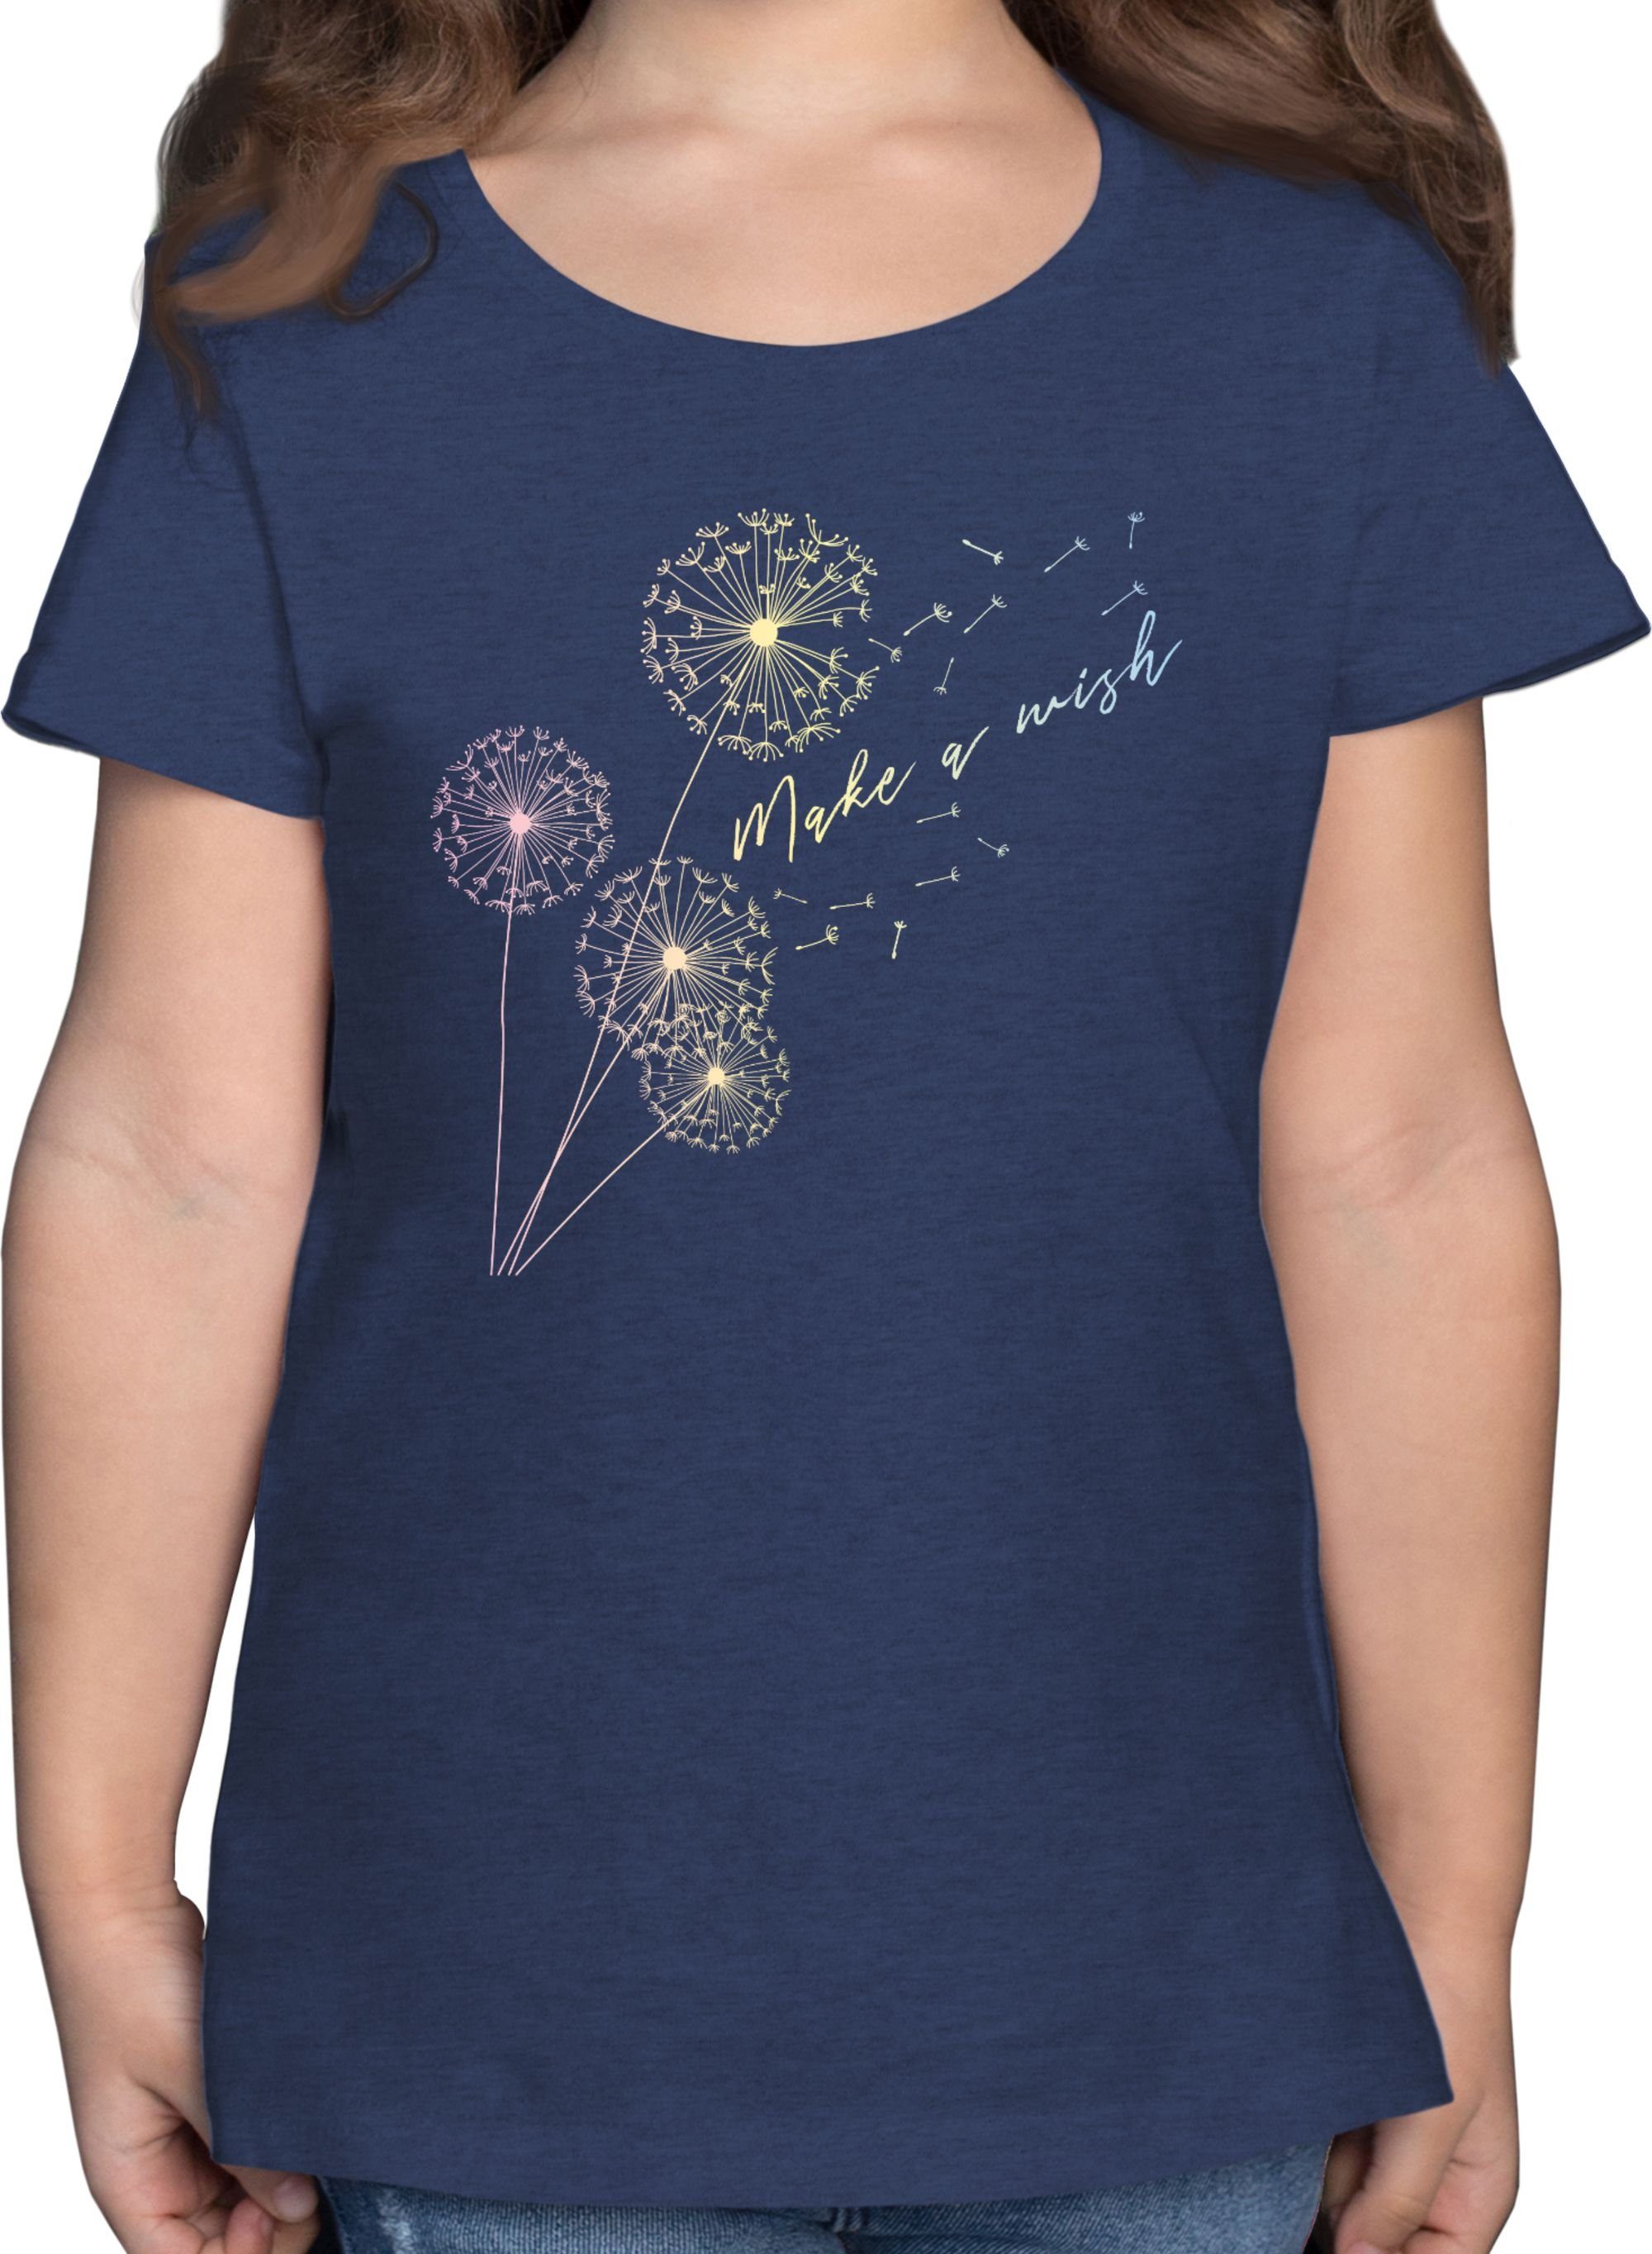 Shirtracer T-Shirt Pusteblume Flower Kinderkleidung und Co 2 Dunkelblau Meliert